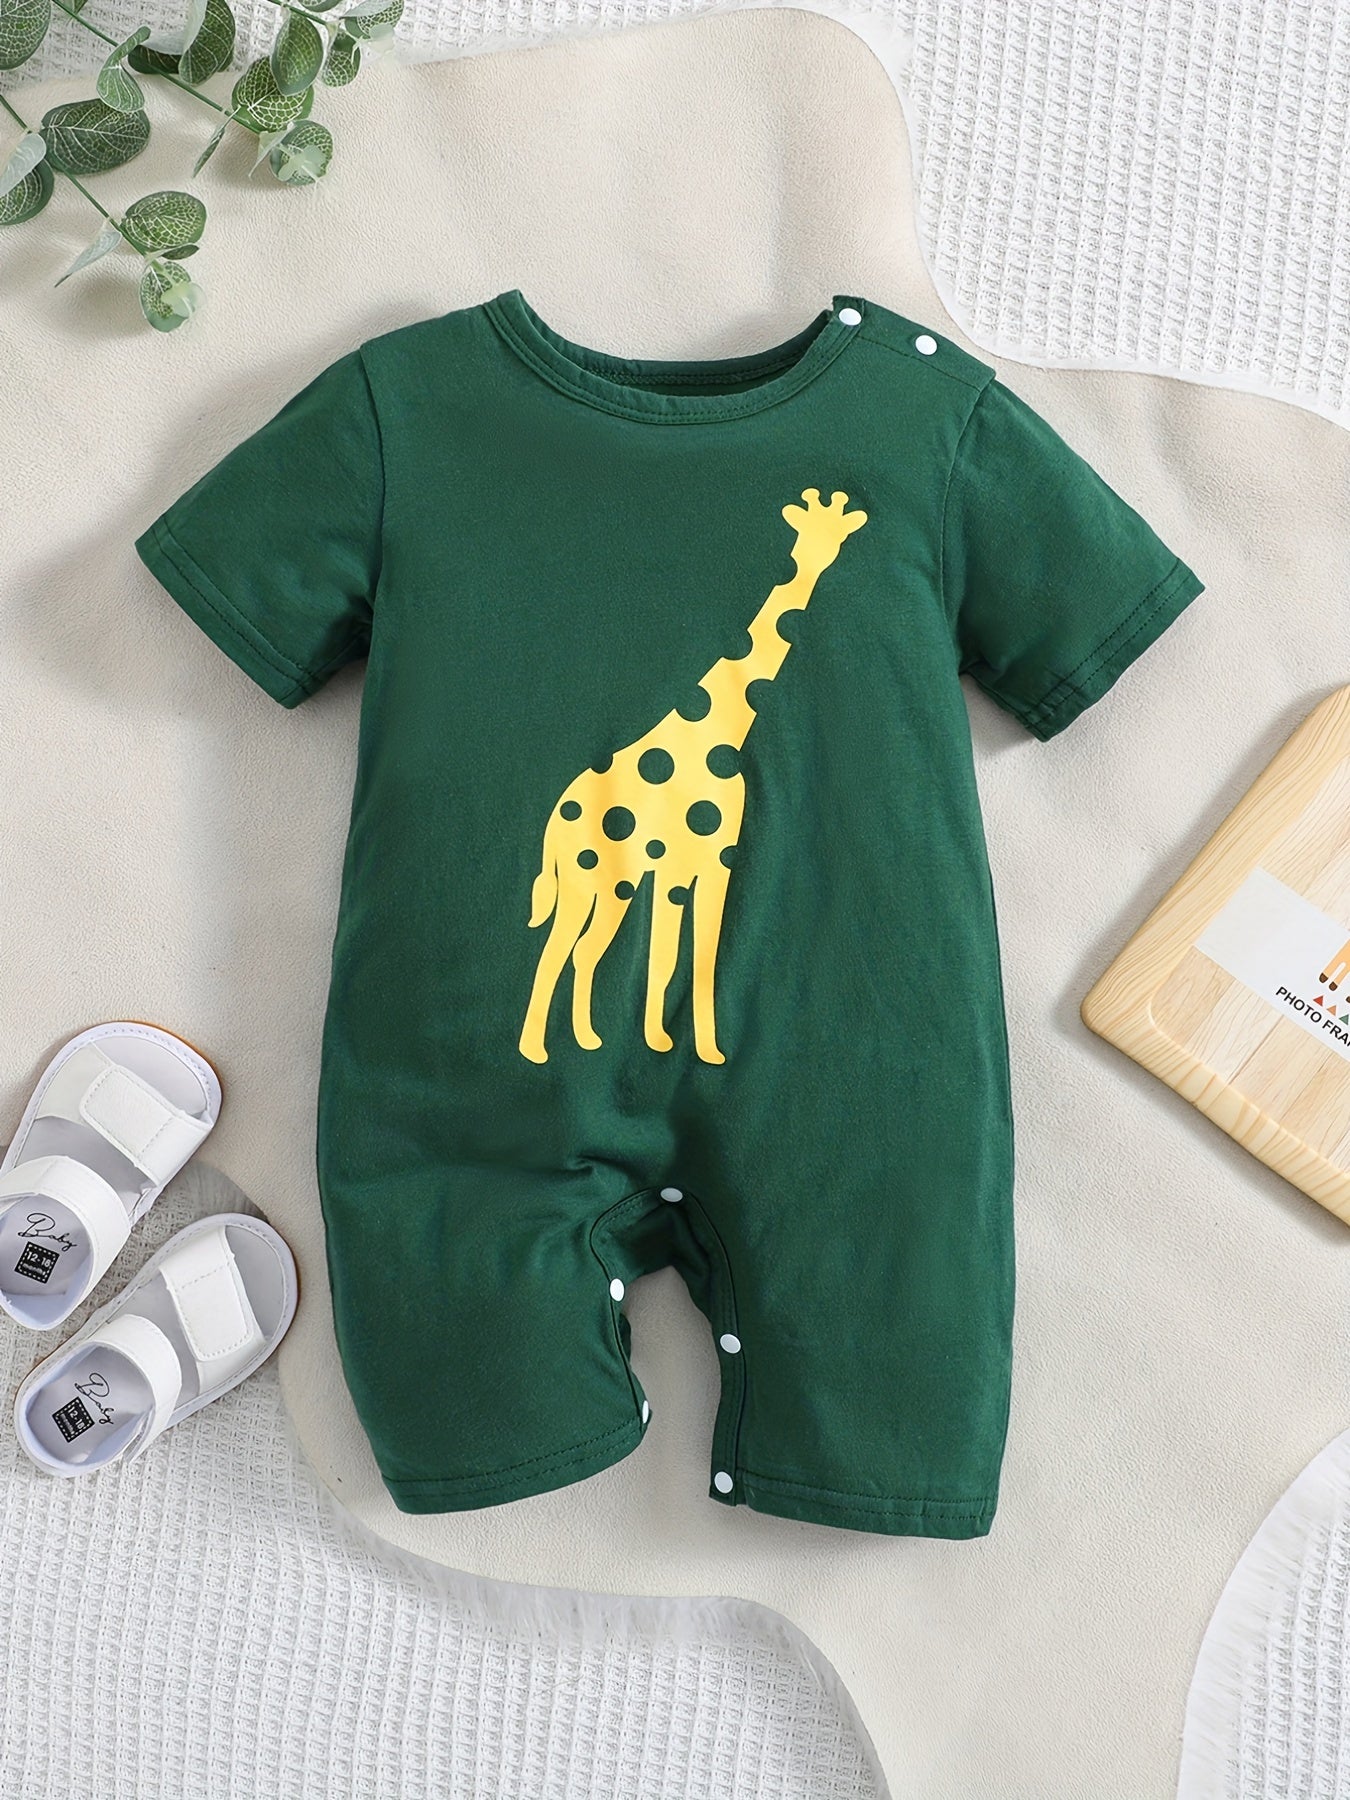 Cute Cartoon Giraffe Graphic Baby Romper, Infant Jumpsuit, Newborn Cotton Summer Clothes